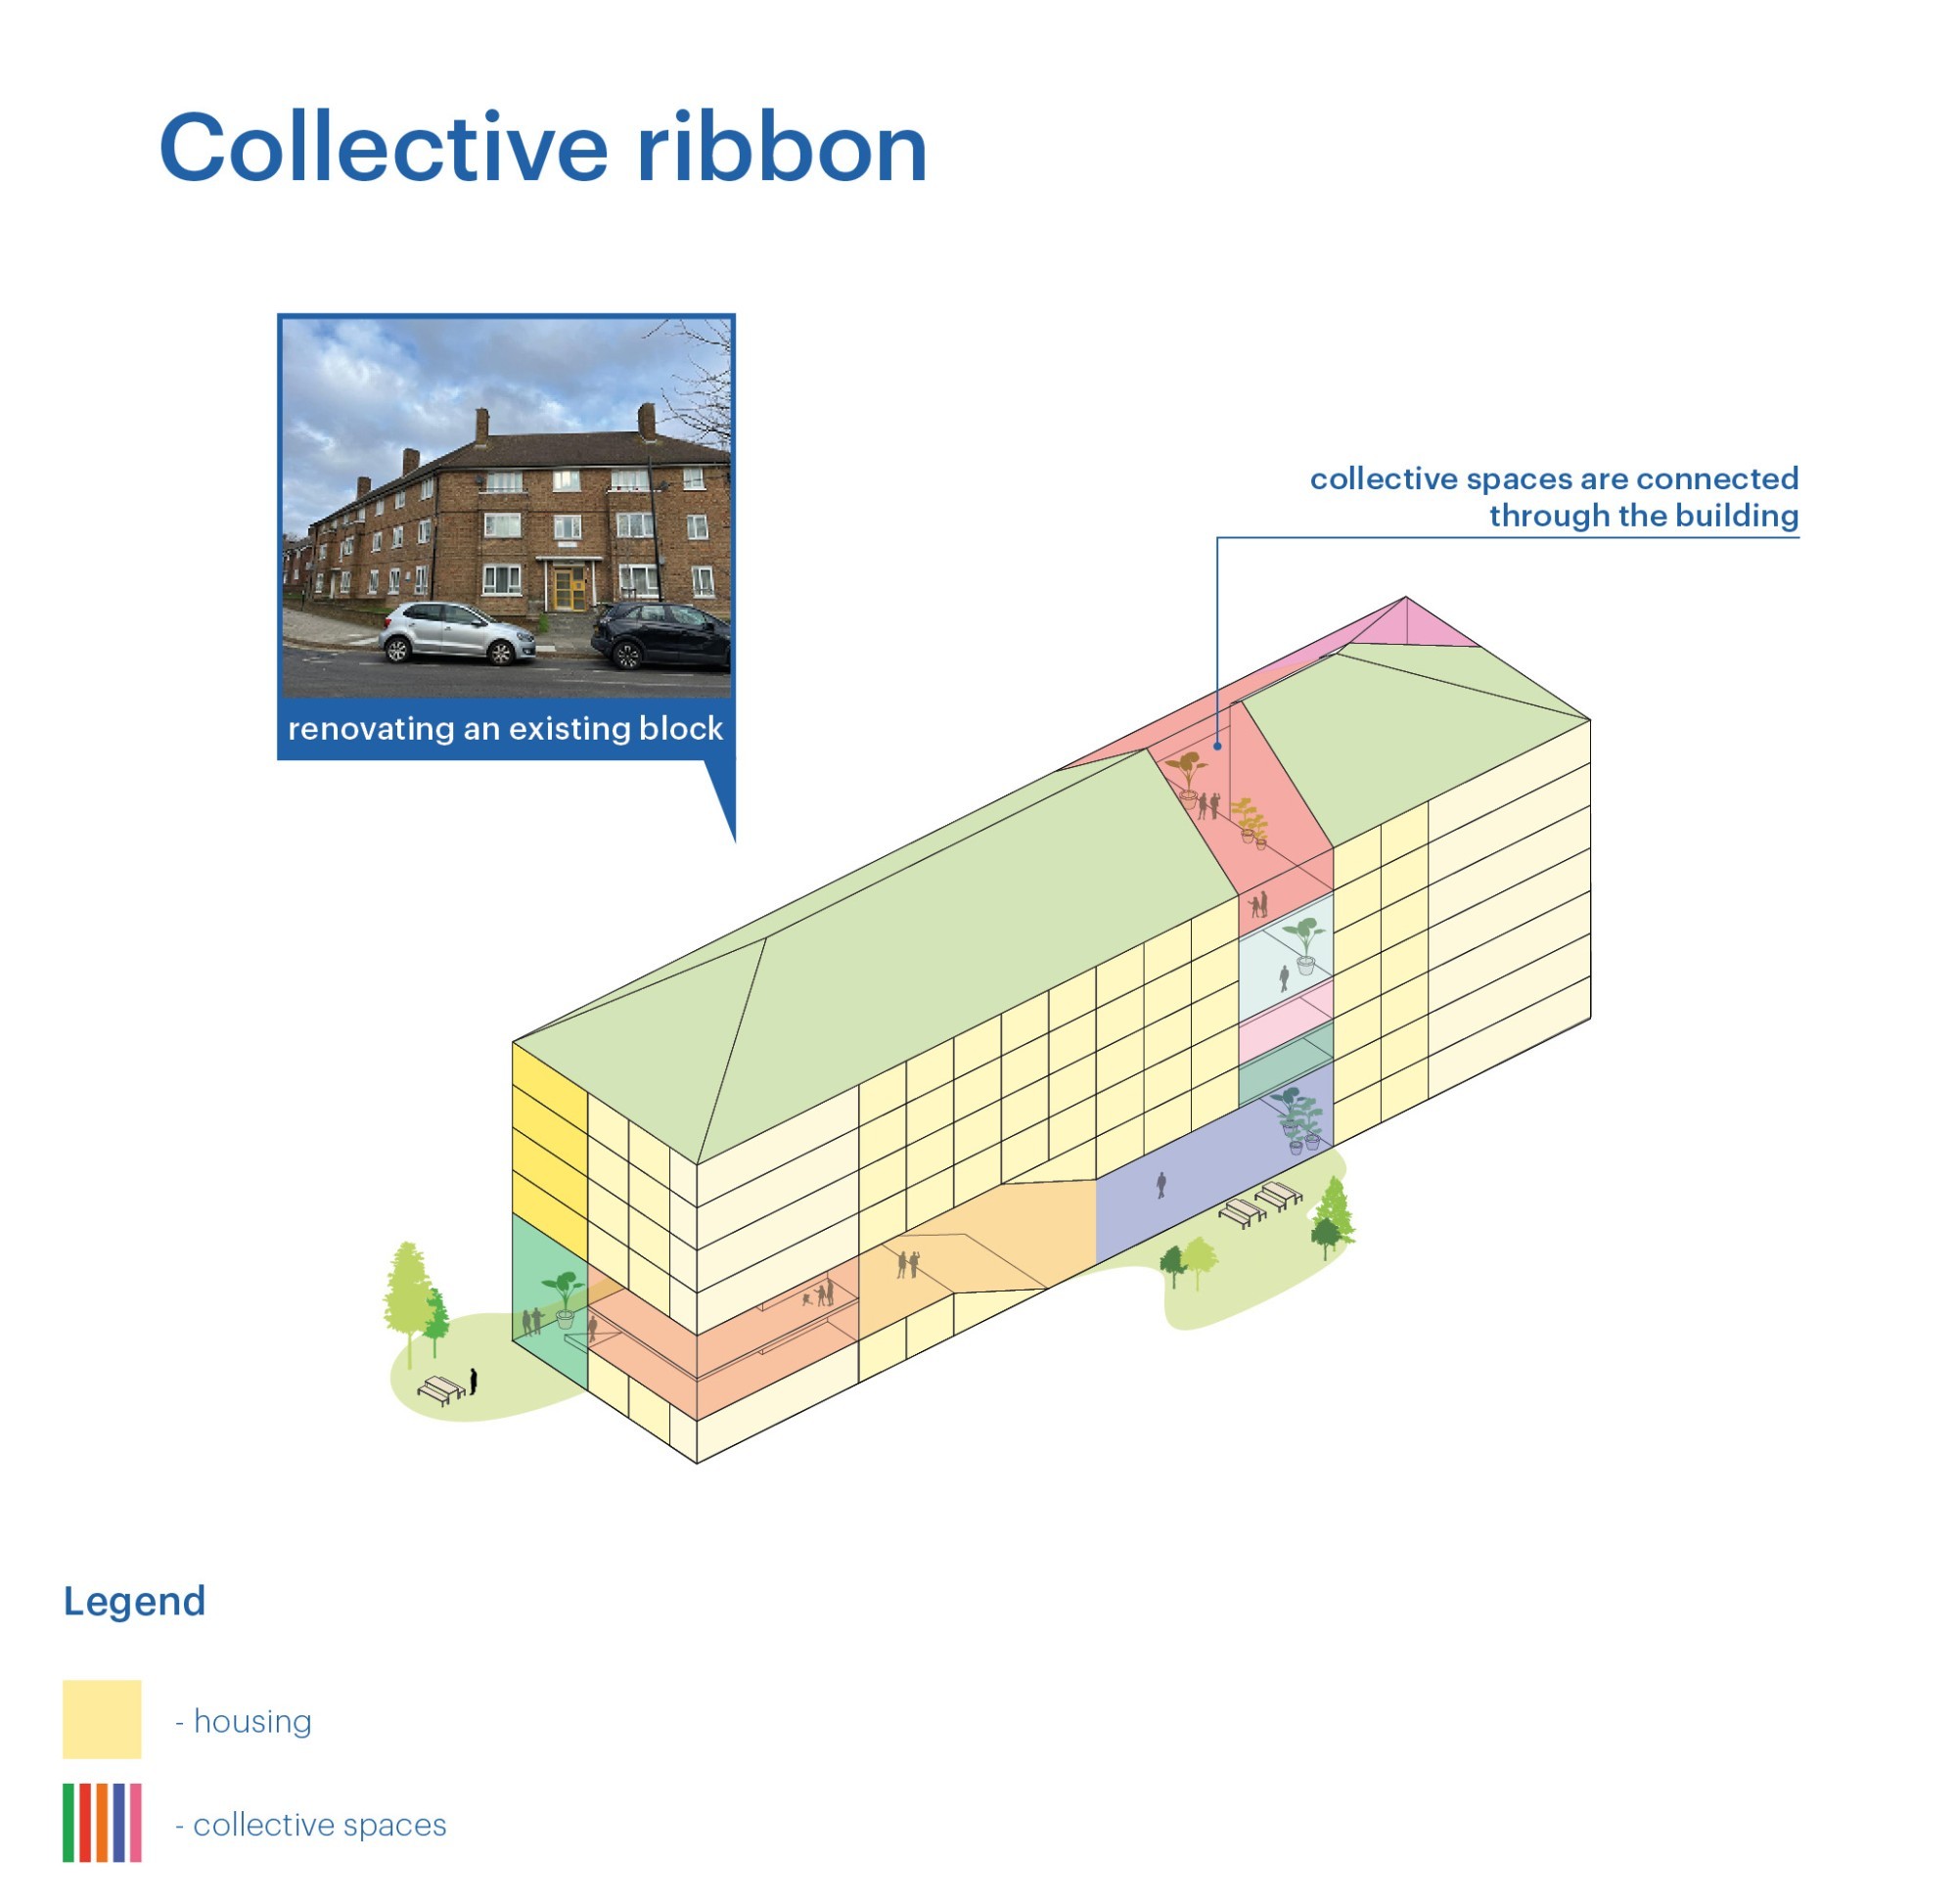 Collective ribbon